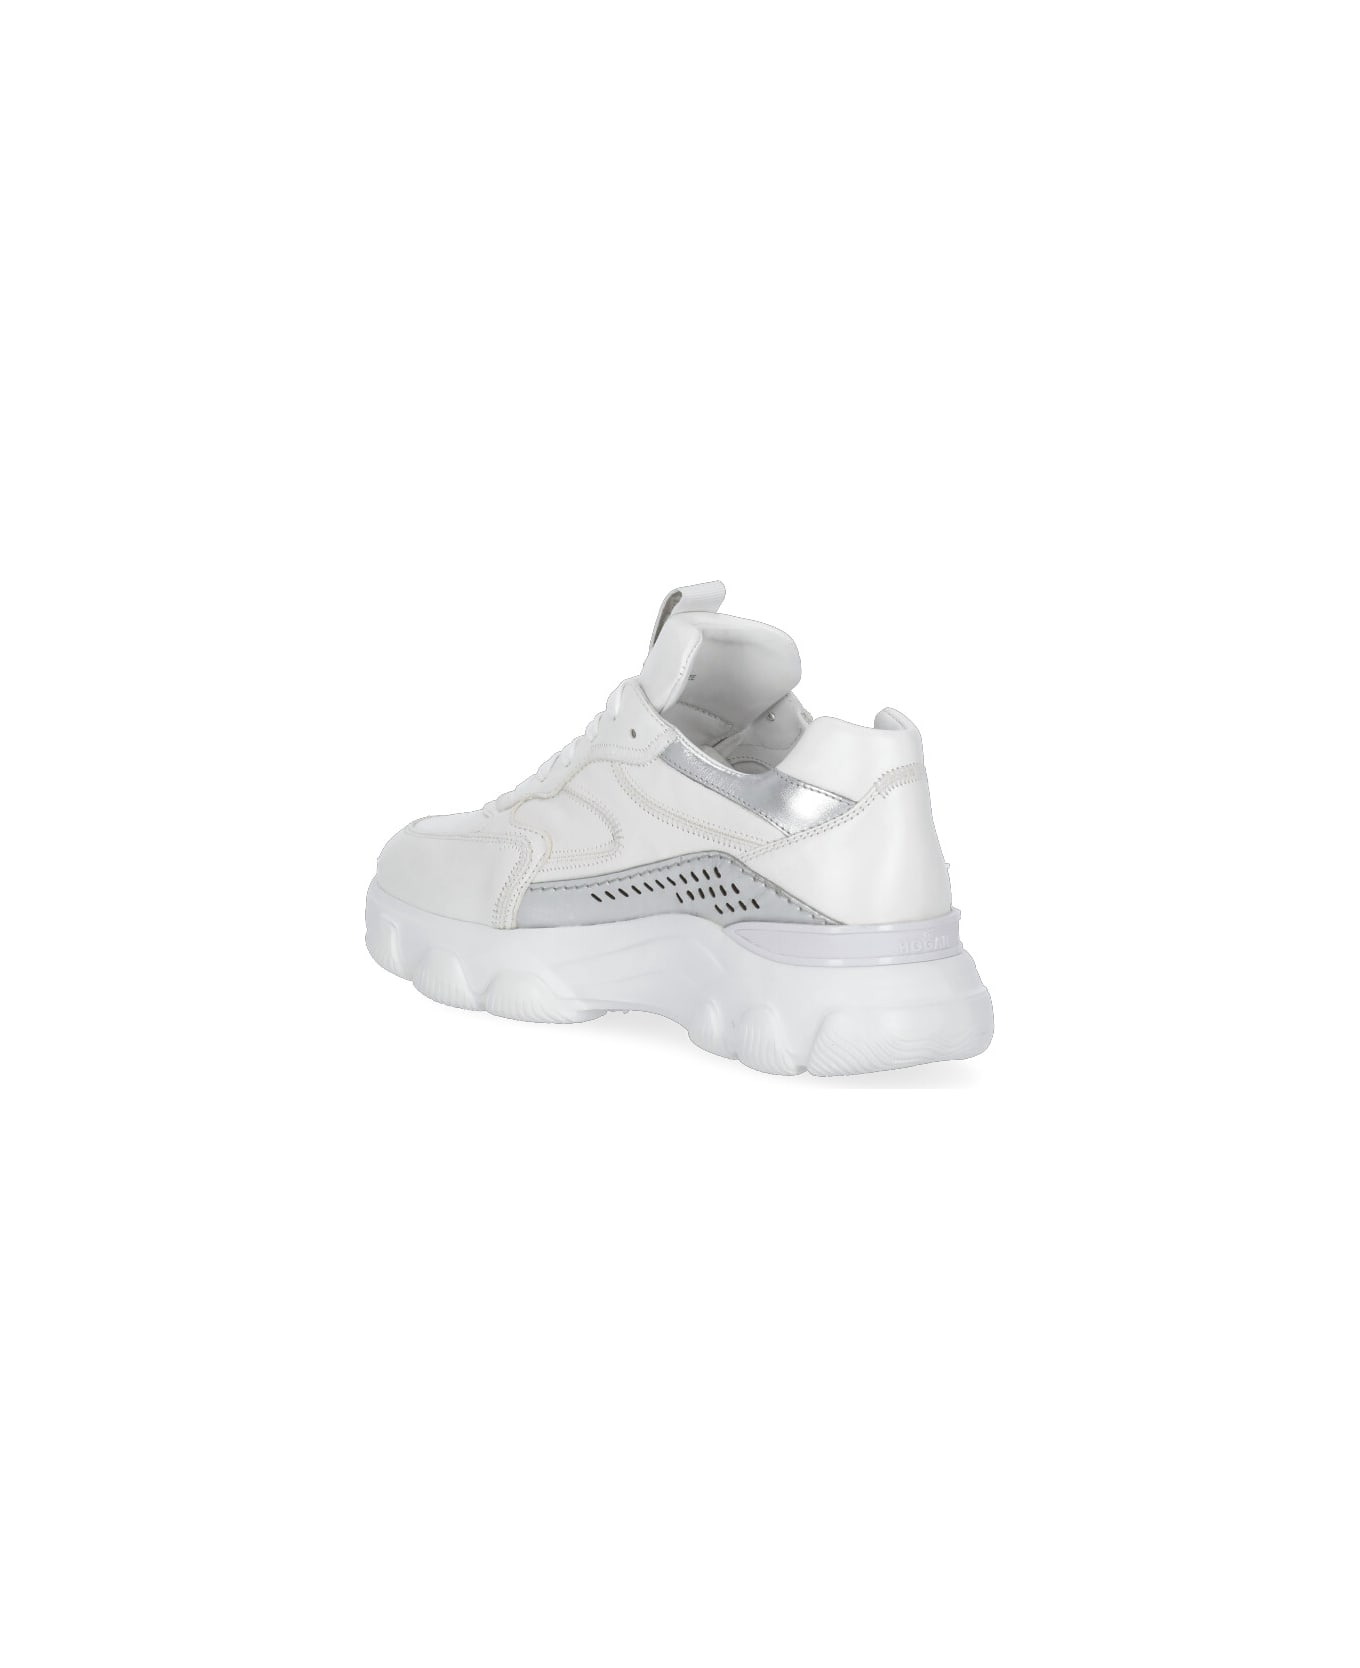 Hogan Hyperactive Sneakers - White スニーカー